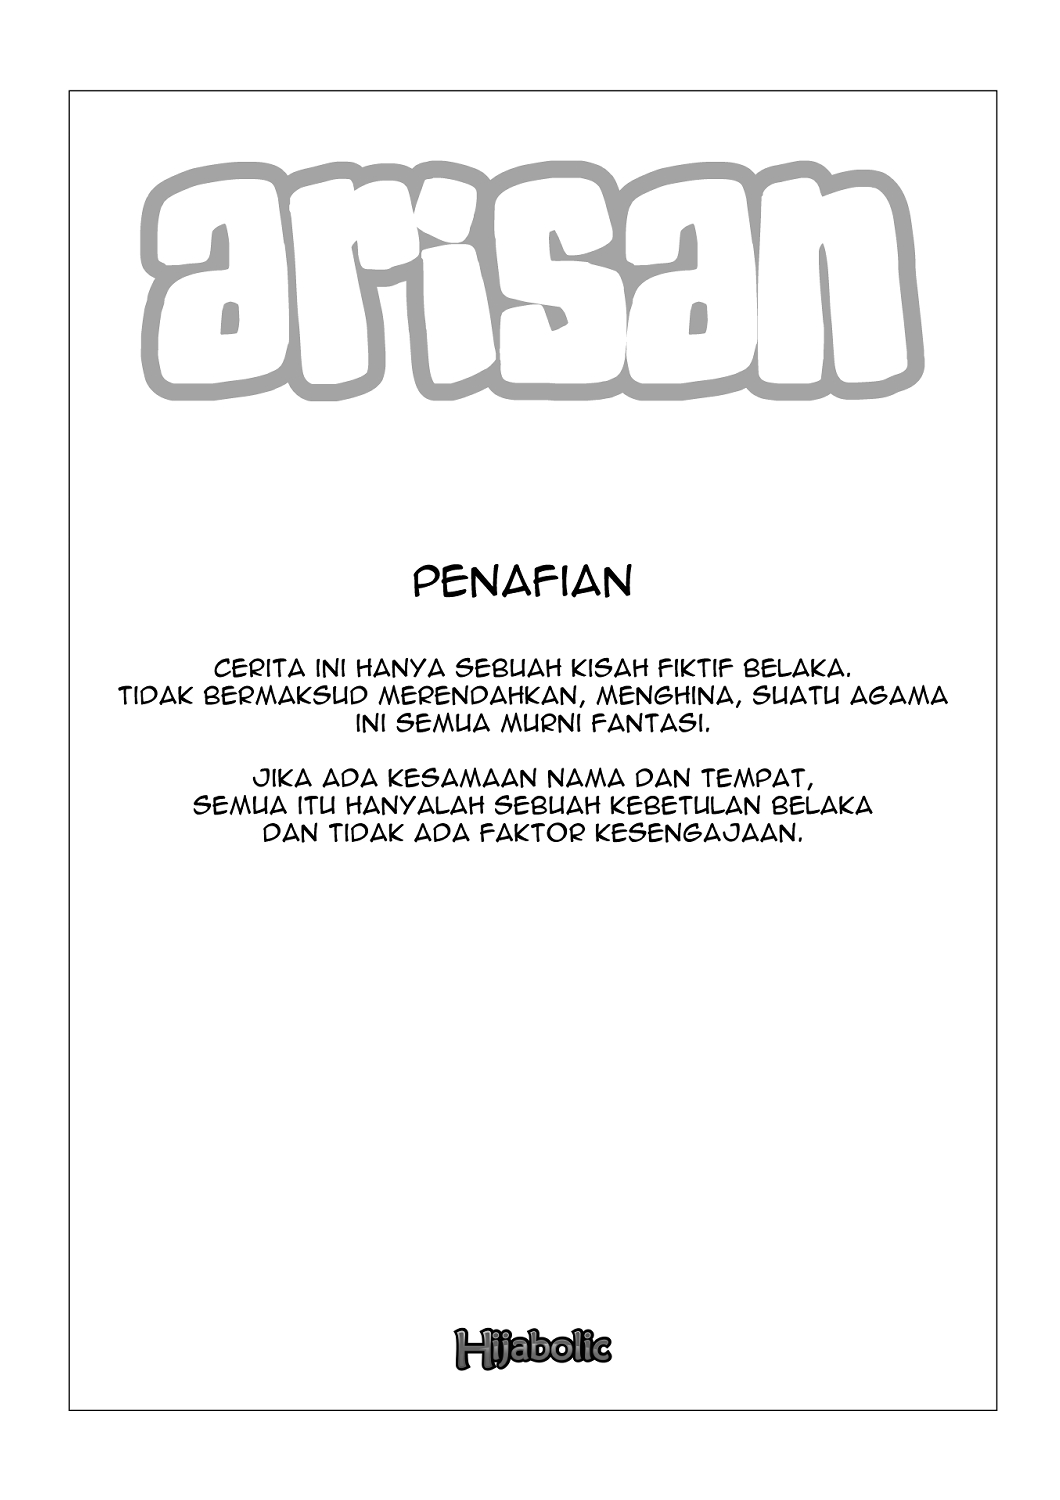 Adult comic indonesian language porn photo